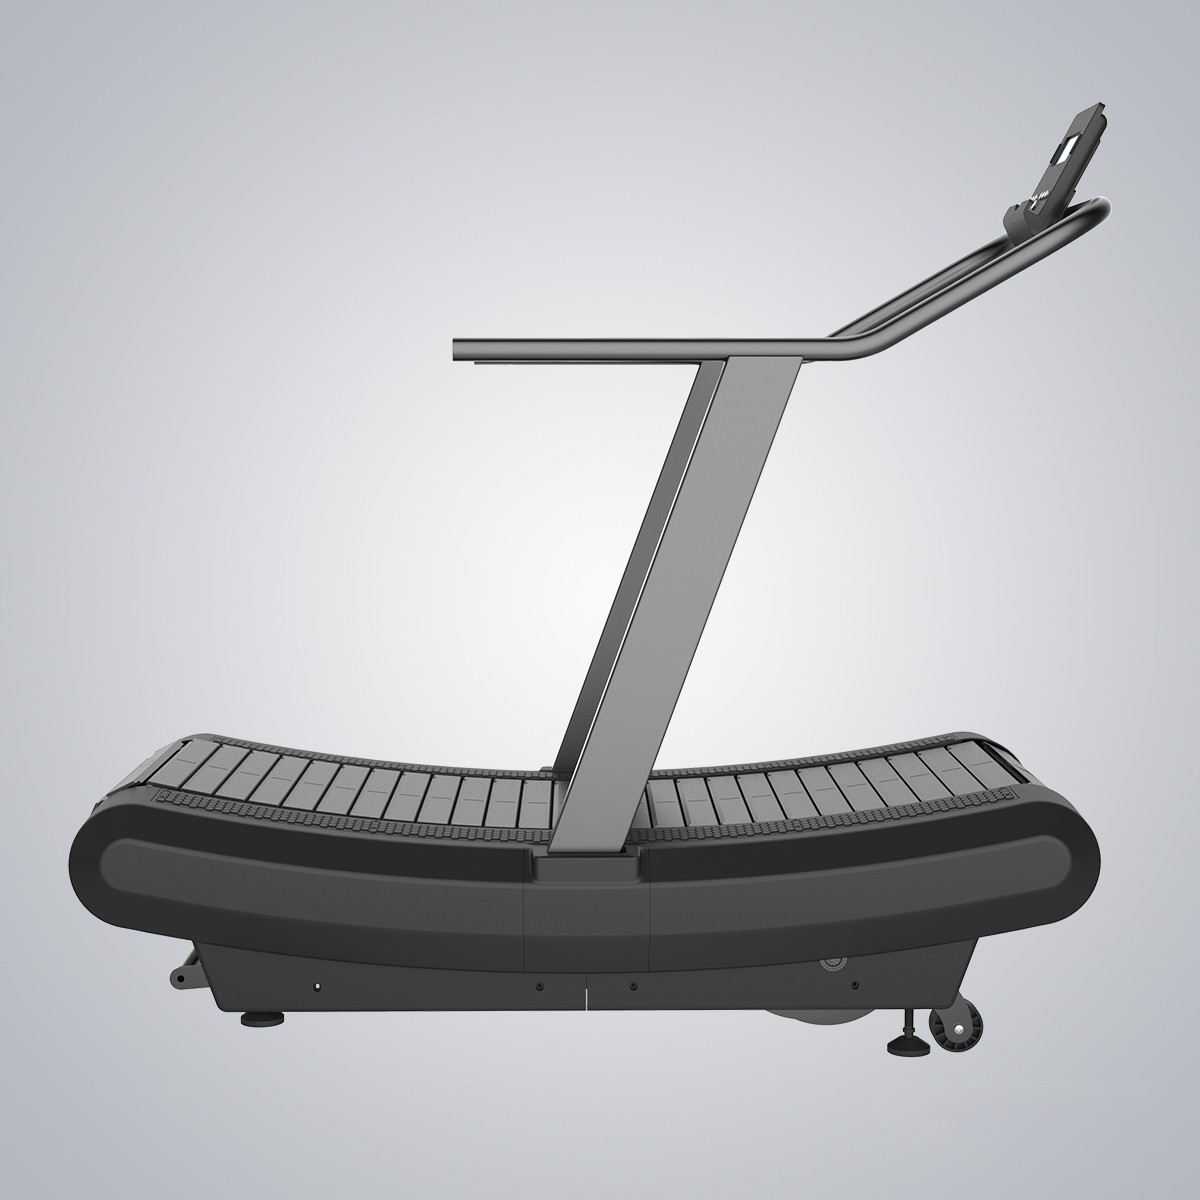 Curve Treadmill A7000